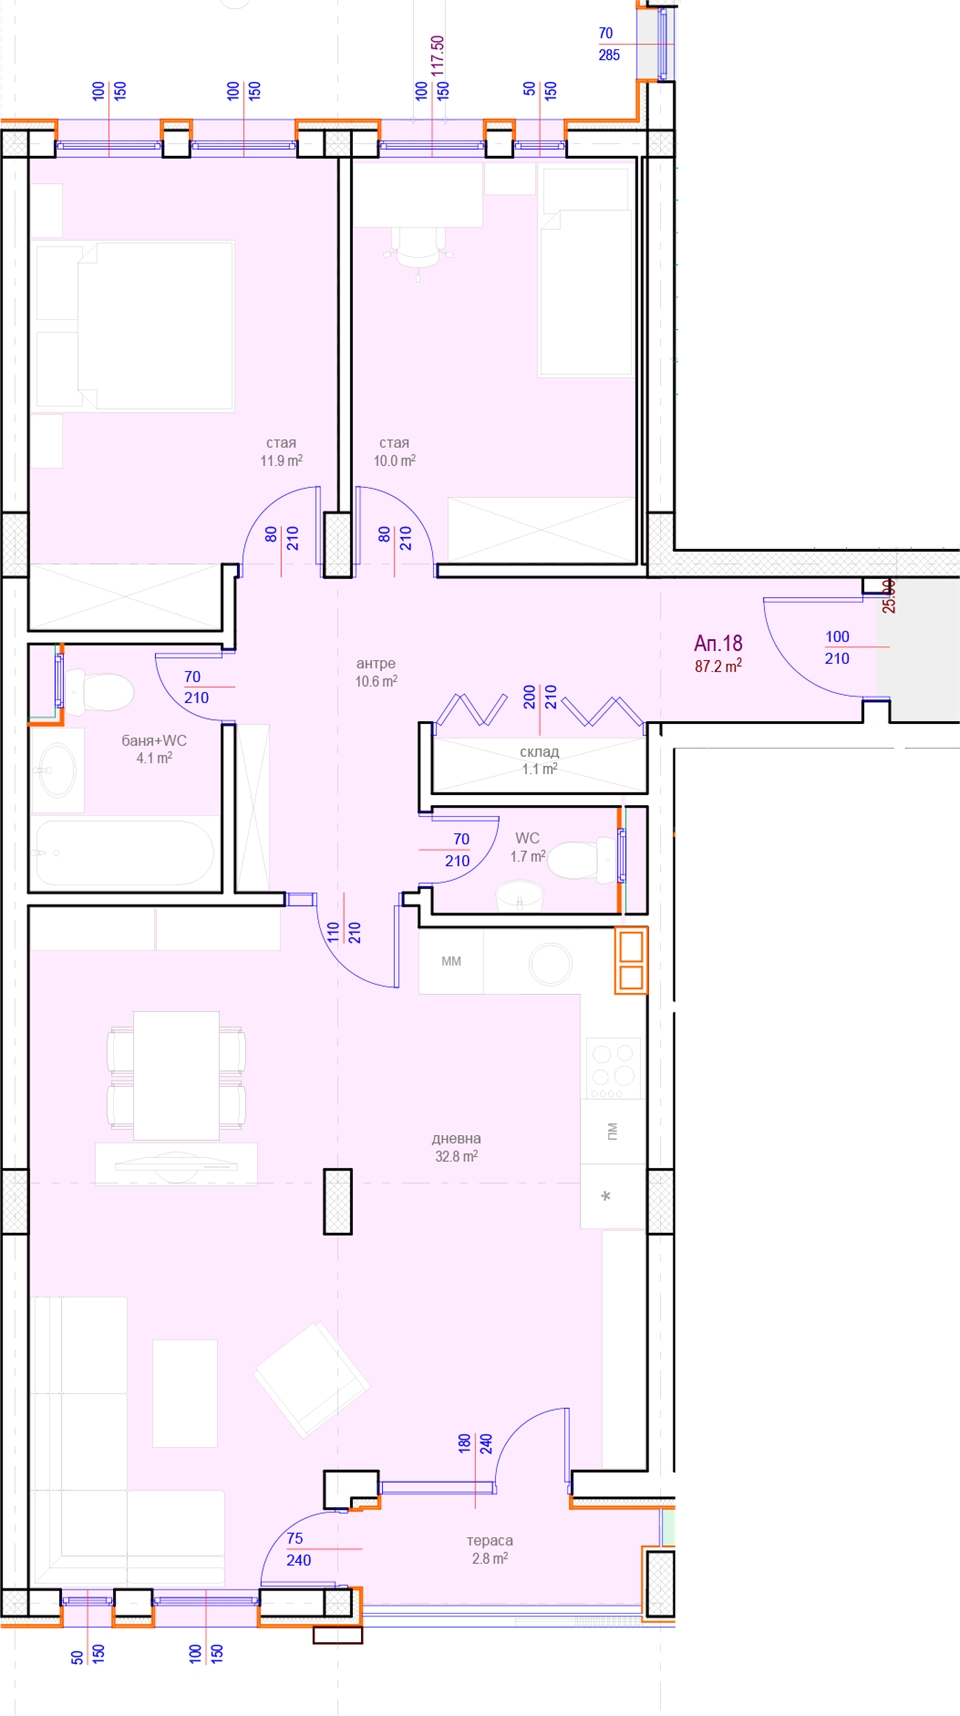 Апартамент № 18, Вход Б, 1 етаж, Изложение С-Ю